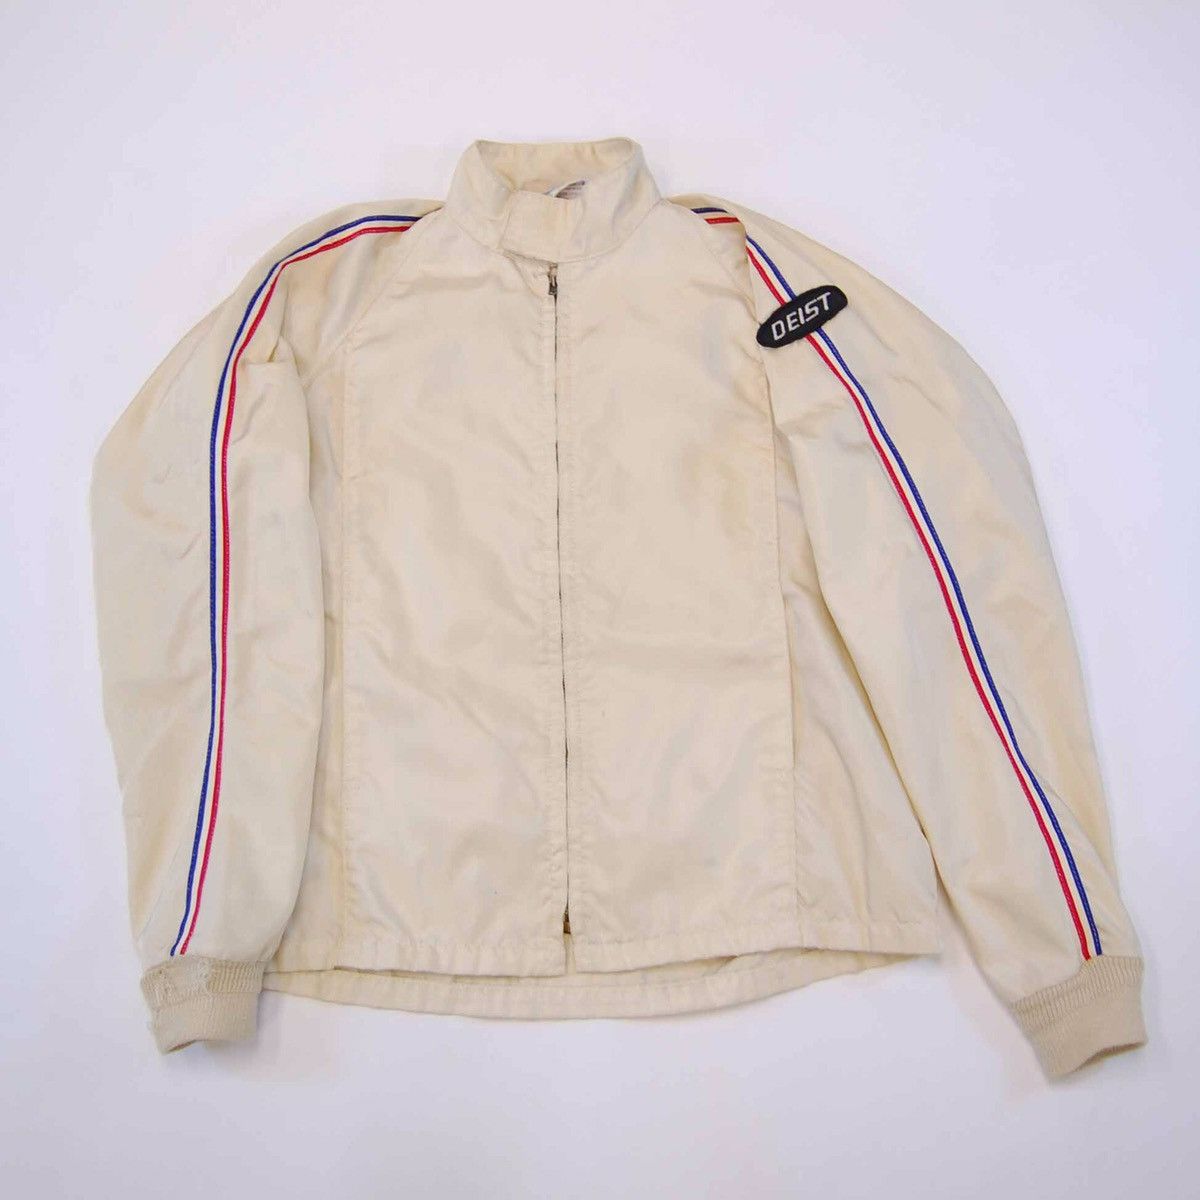 Vintage 70’s Deist Safety Full Zip Jacket | Grailed